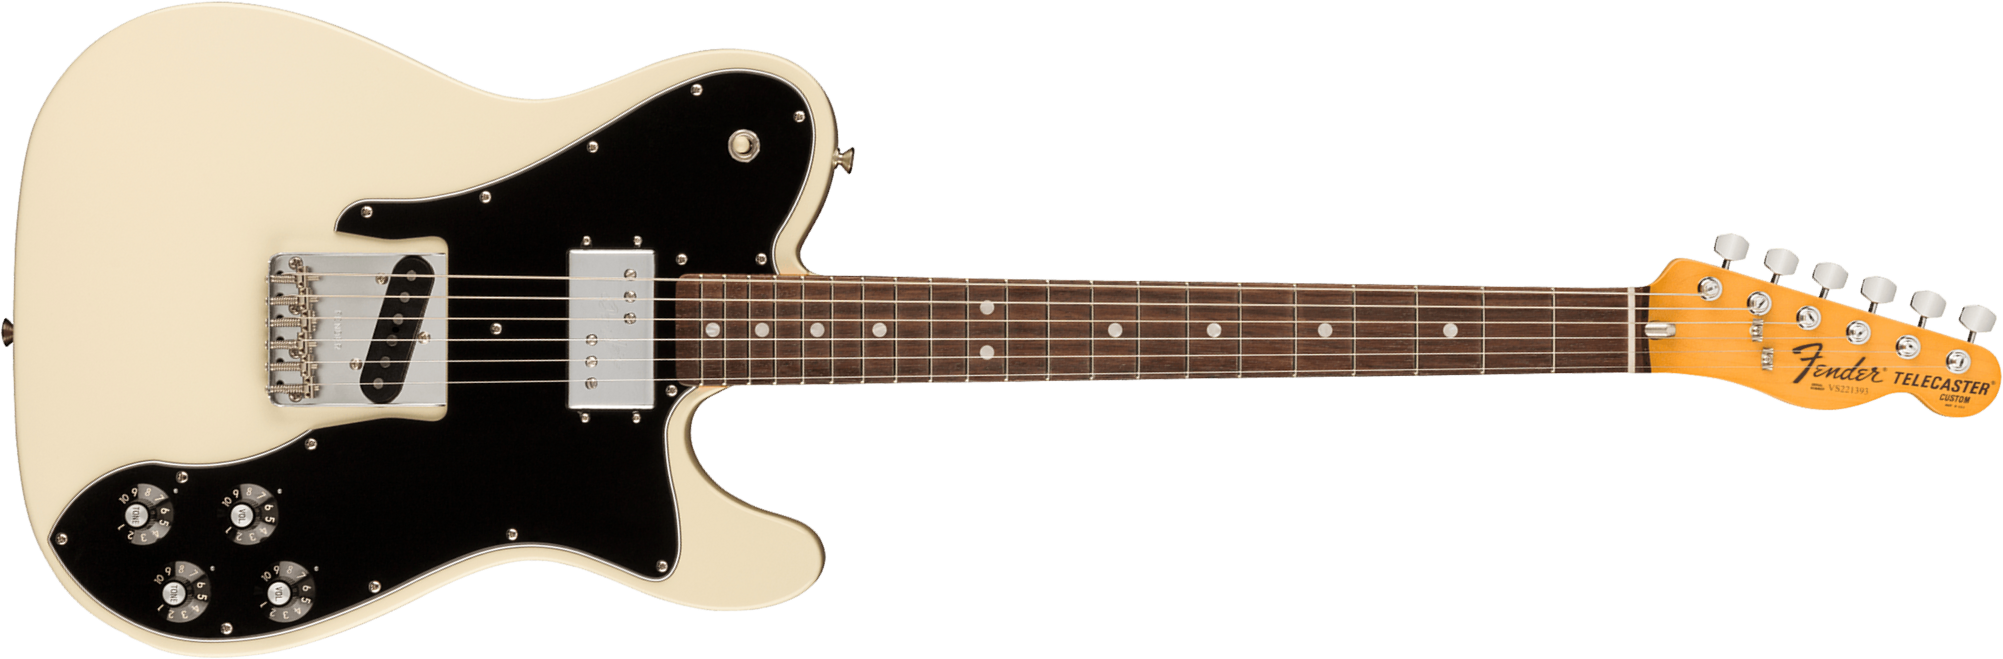 Fender Tele Custom 1977 American Vintage Ii Ltd Usa Sh Ht Rw - Olympic White - Televorm elektrische gitaar - Main picture